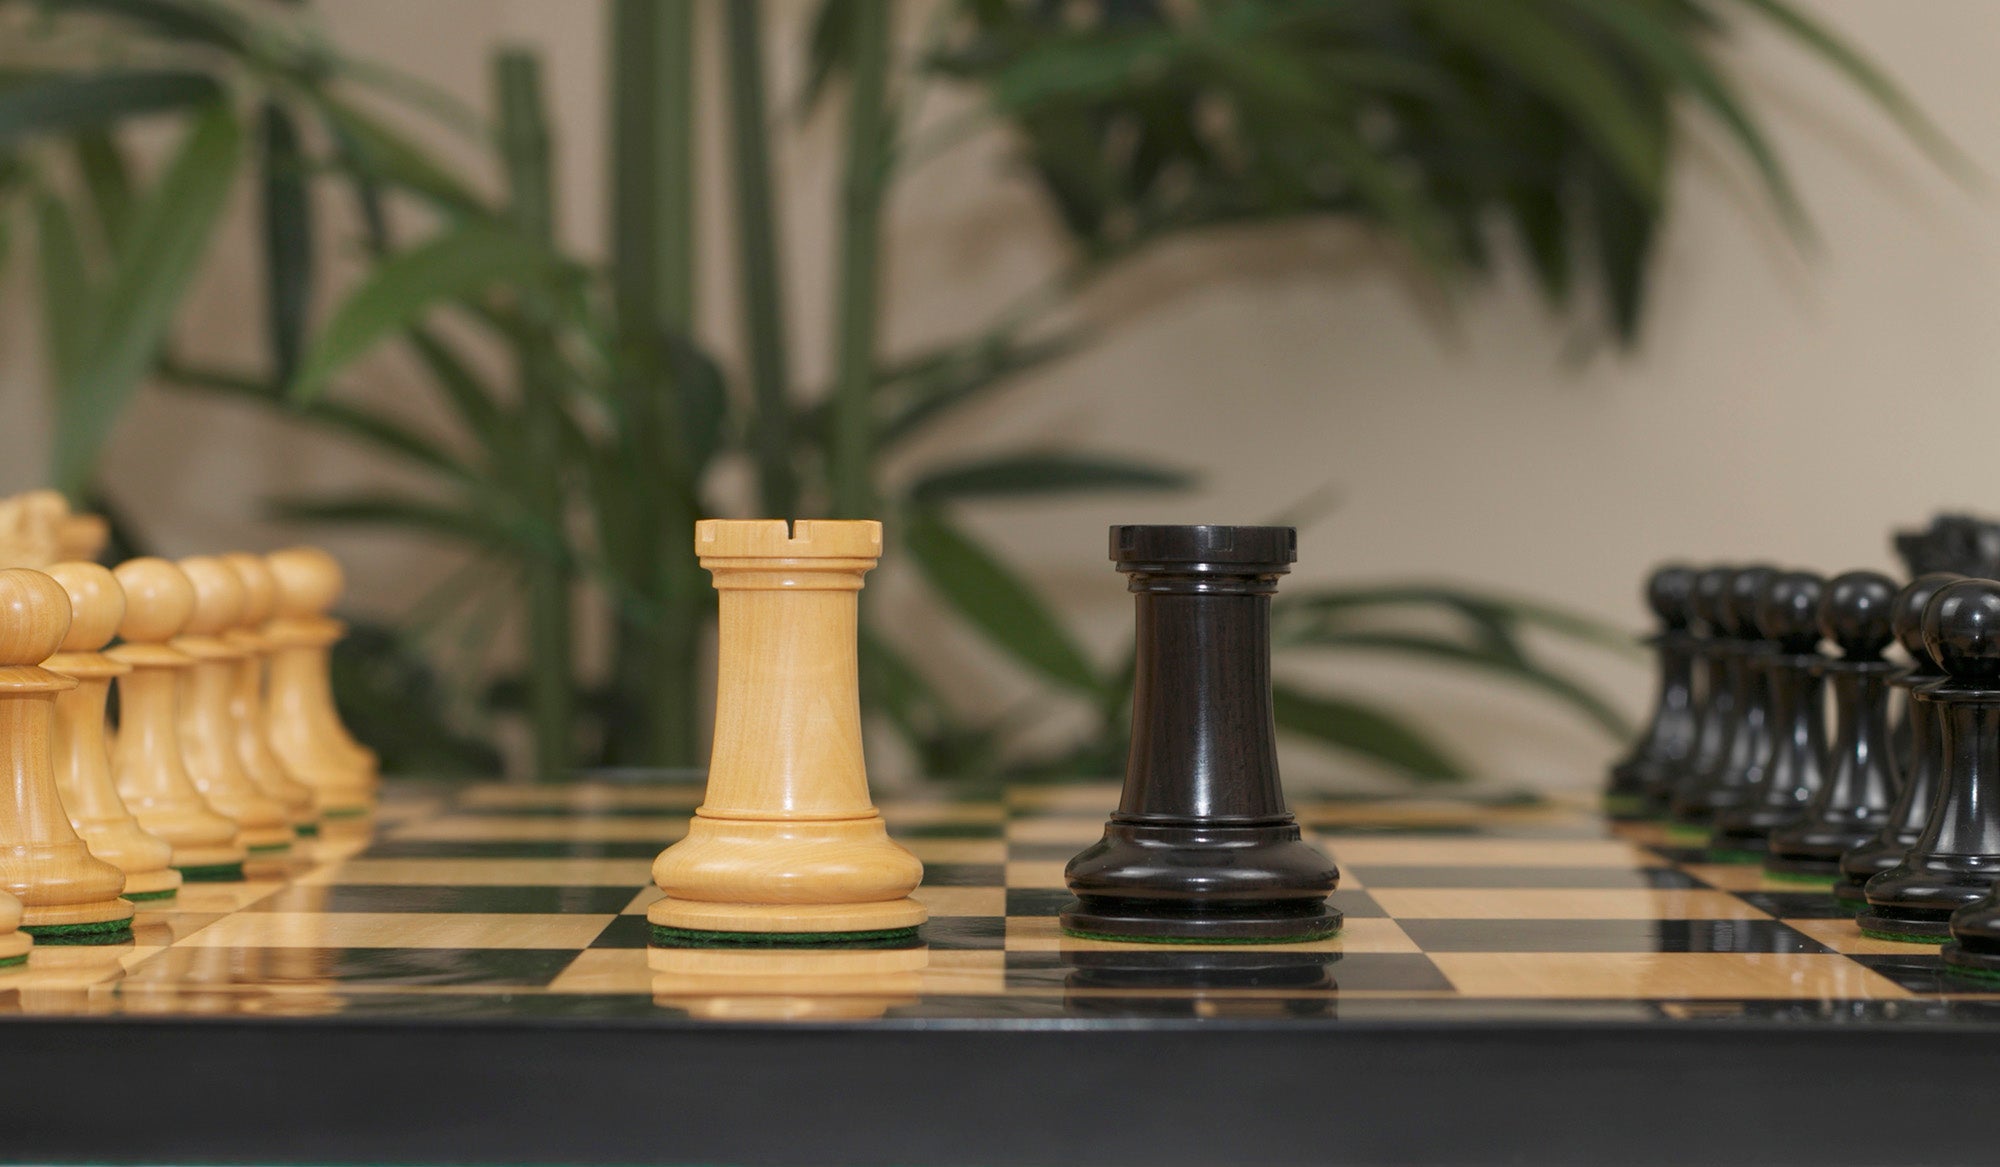 Tristan Series Luxury Staunton Chess Pieces in Ebony wood: King Size 4"